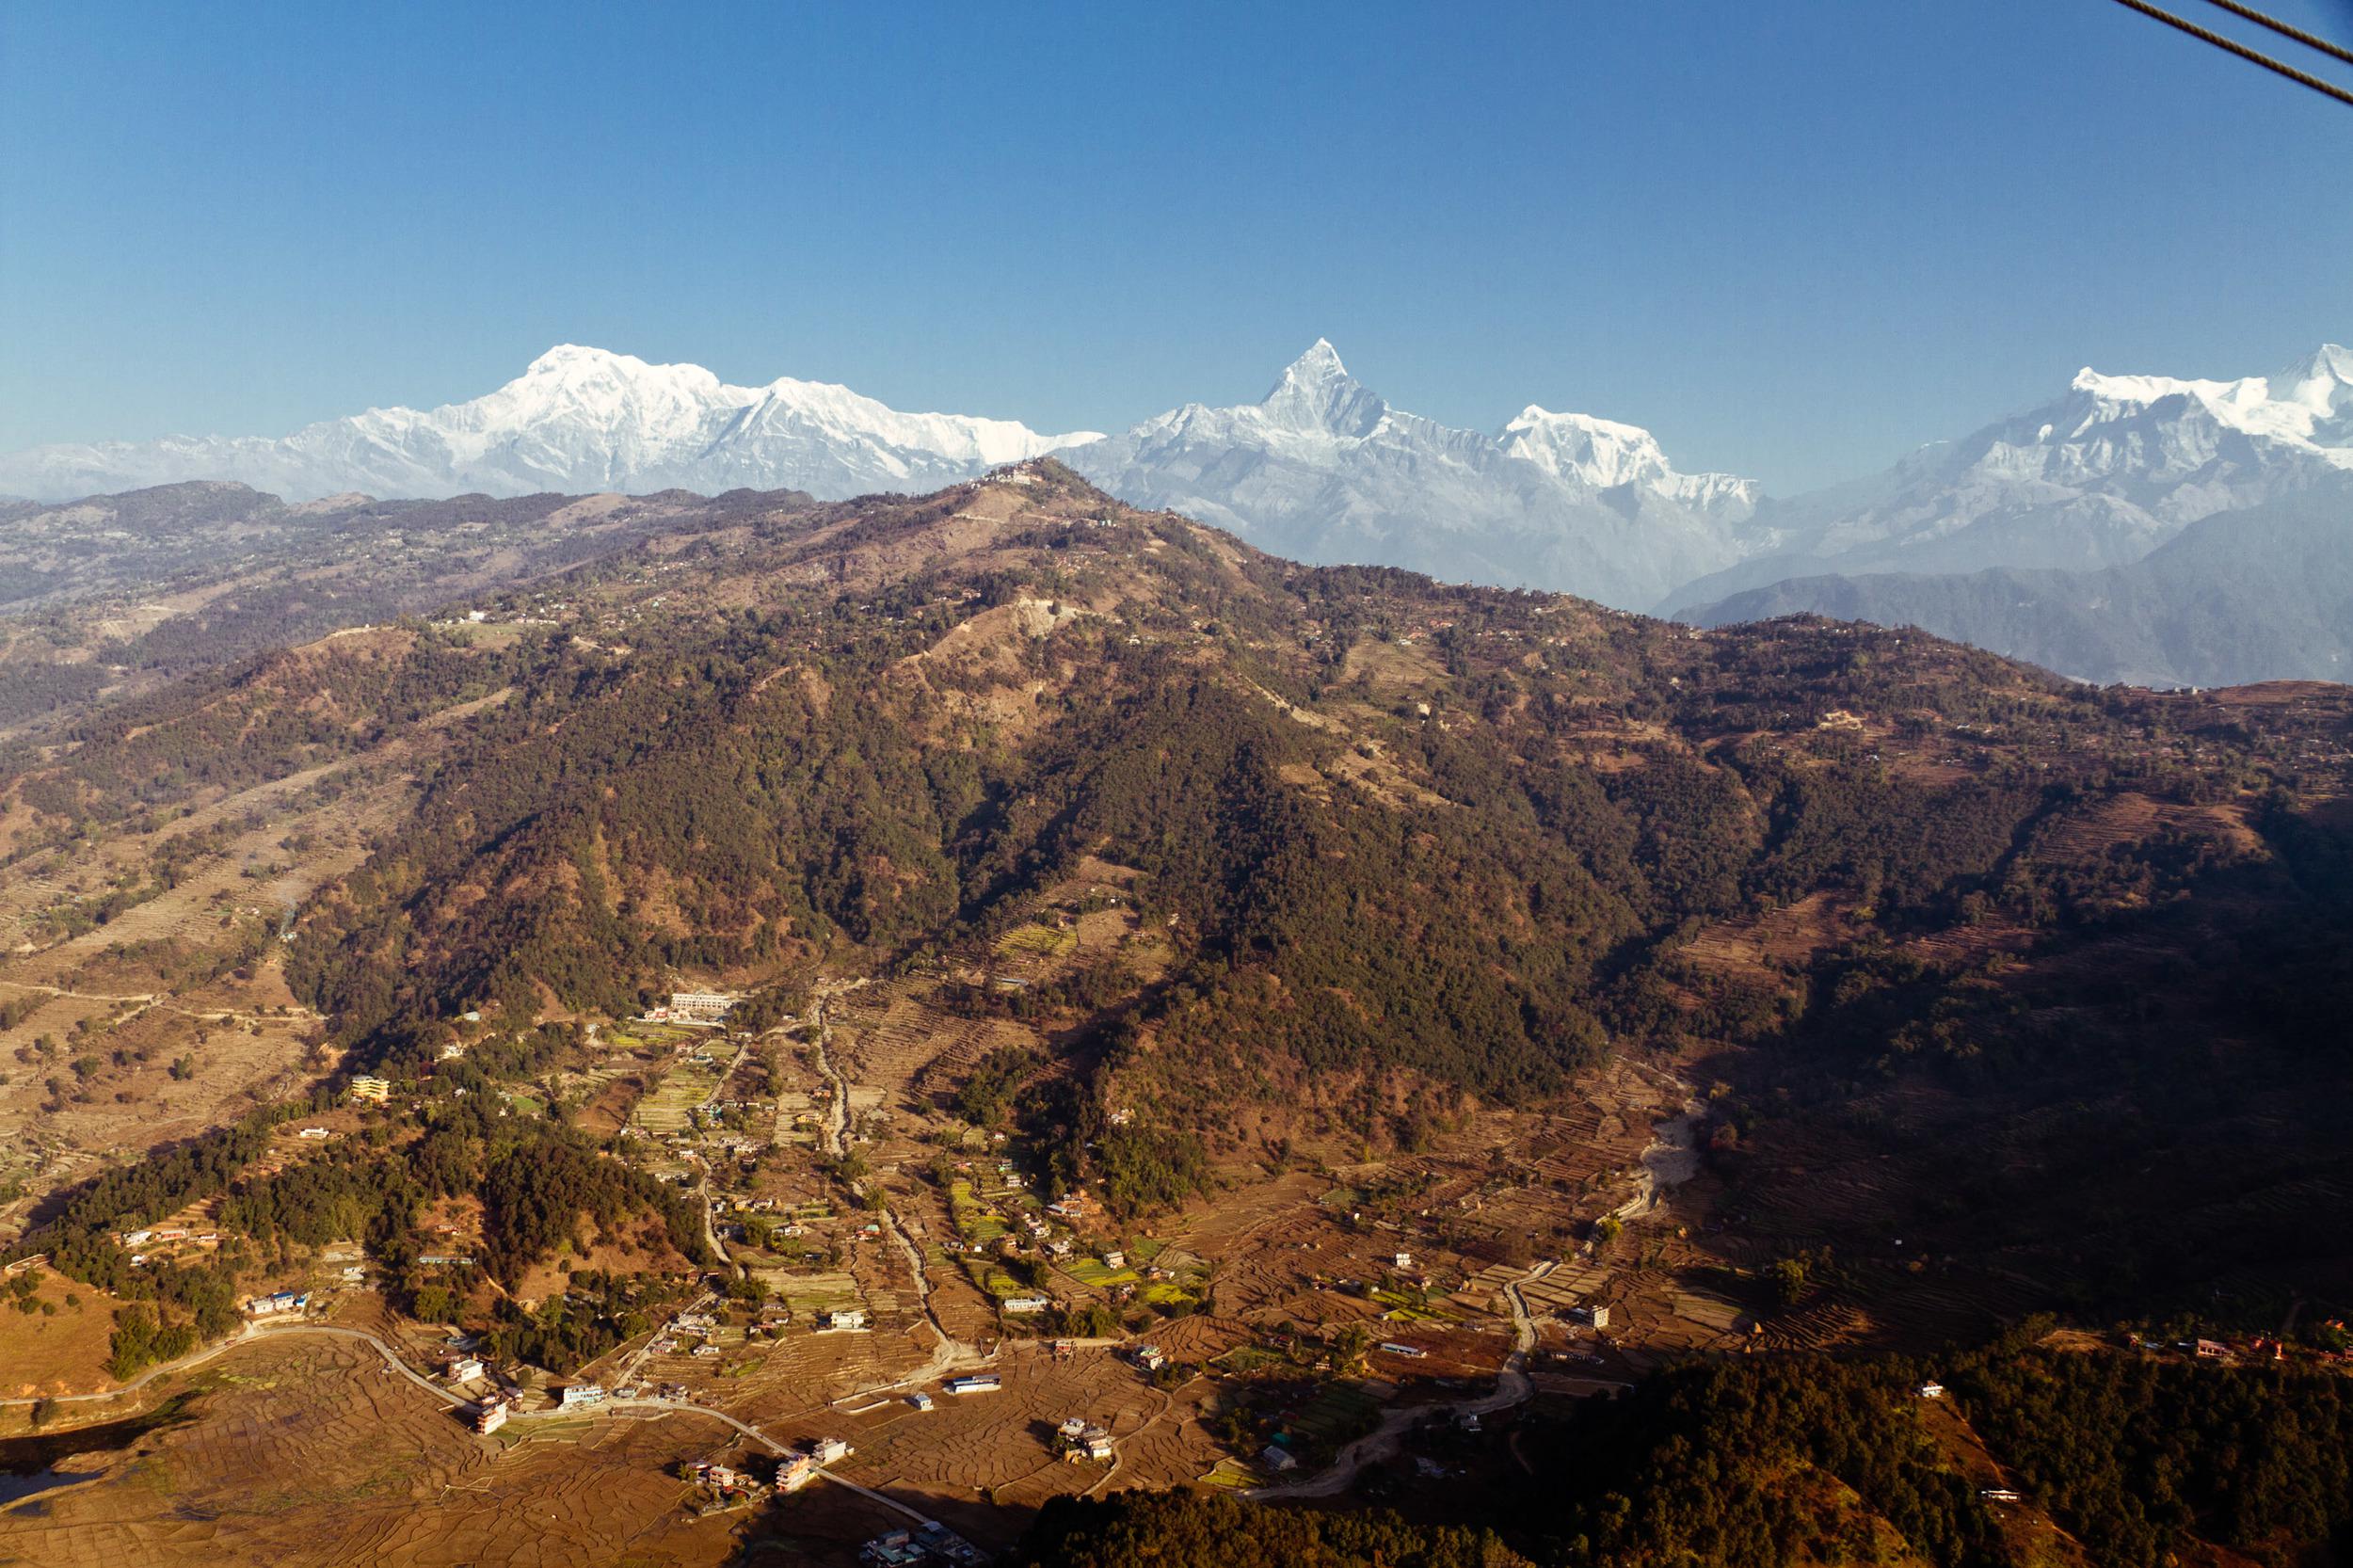 Gallery Nepal - Image 39